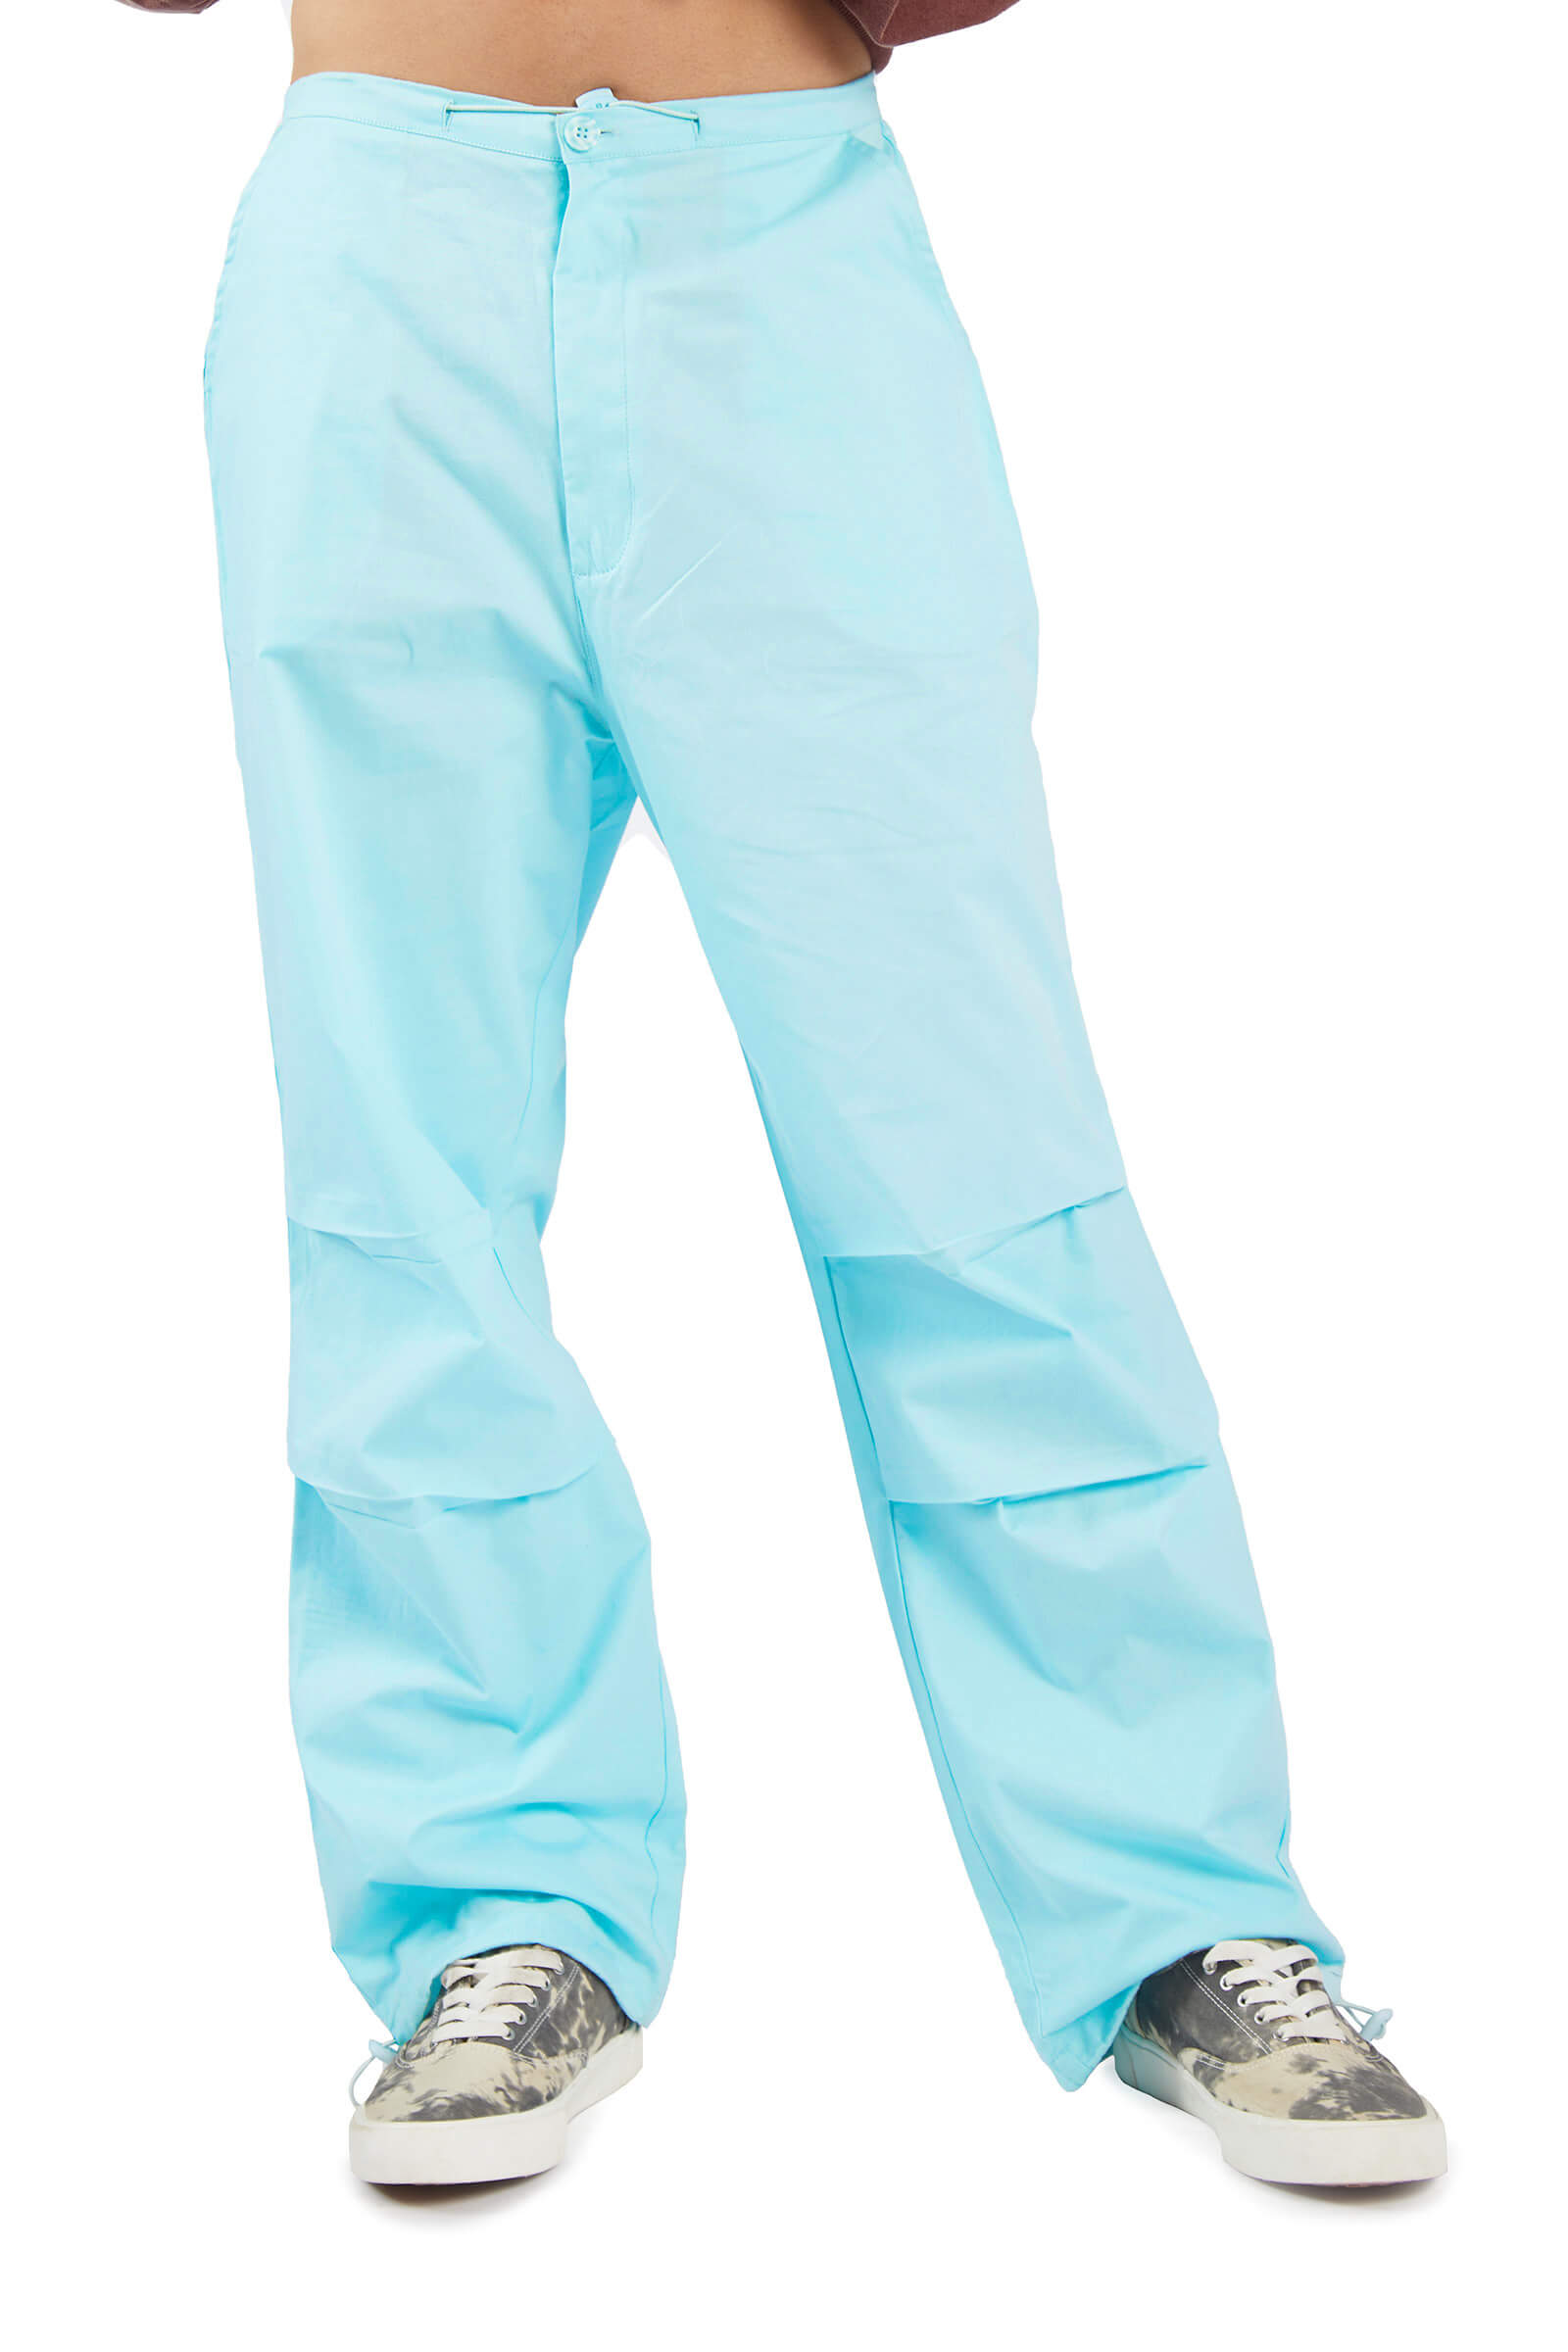 Laguna Low Slung Parachute Pant  Blue  Fashion Nova Pants  Fashion Nova